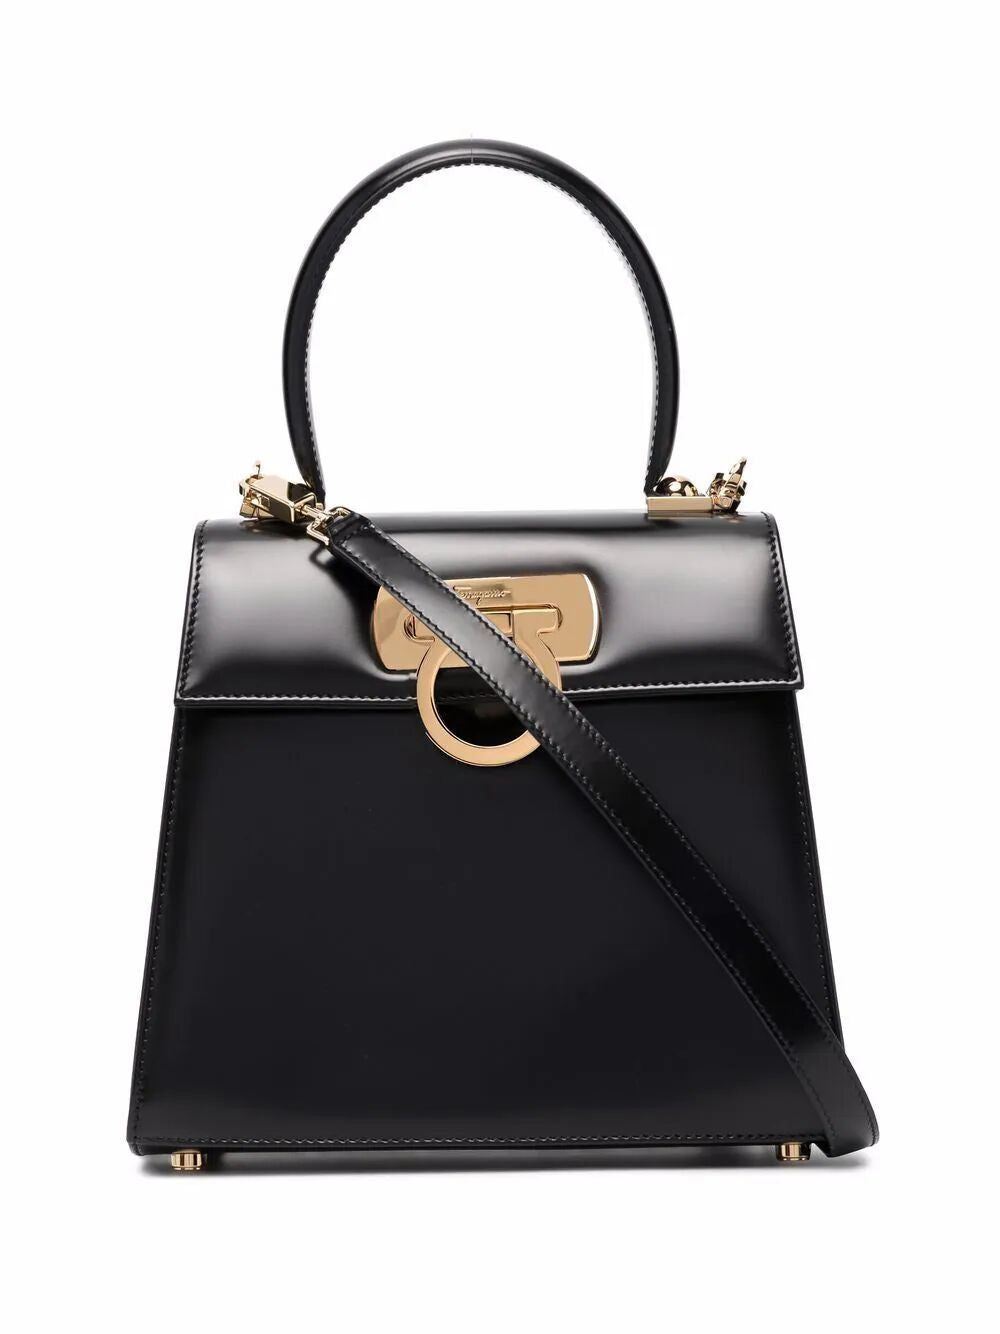 FERRAGAMO Iconic Black Handbag for Classy Women